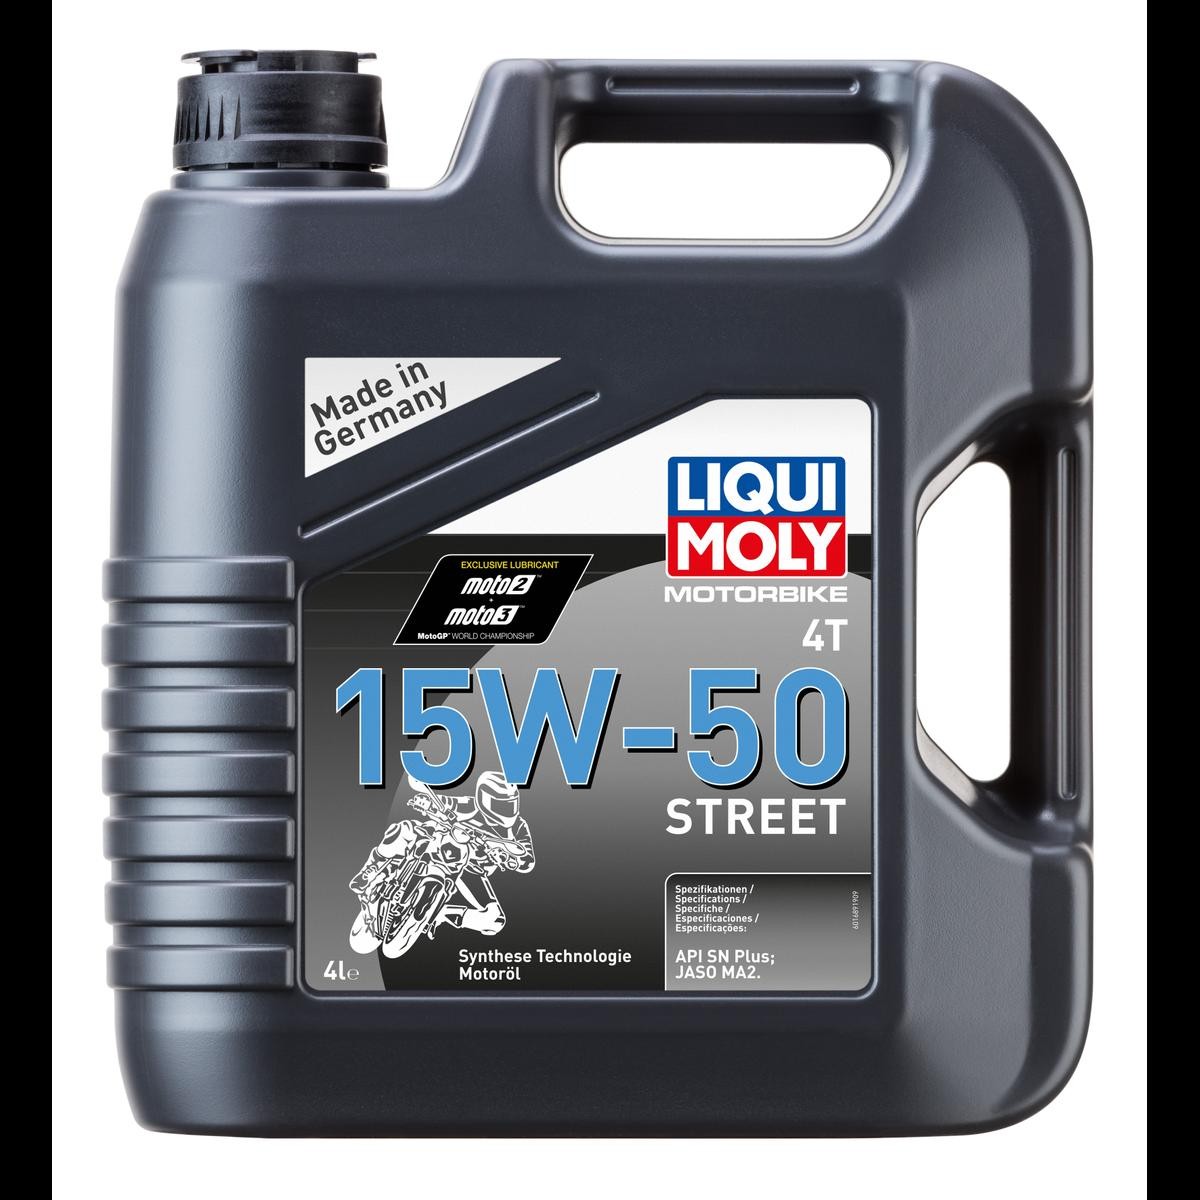 LIQUI MOLY Motorbike, 4T 15W-50, 4l Motor oil 1689 buy